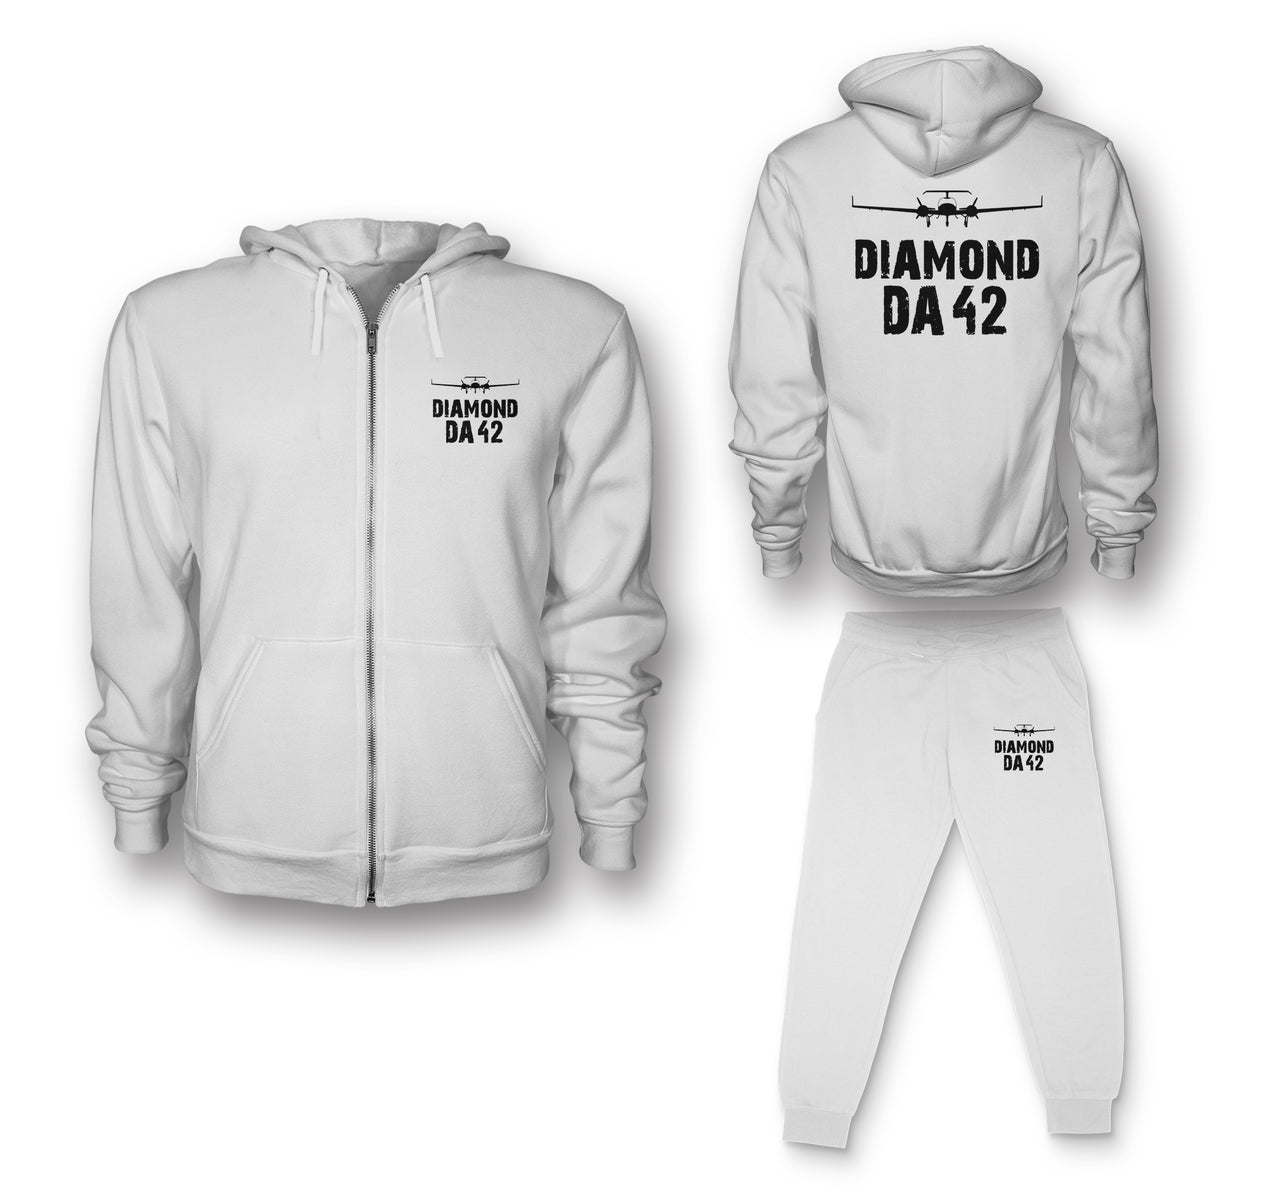 Diamond DA42 & Plane Designed Zipped Hoodies & Sweatpants Set